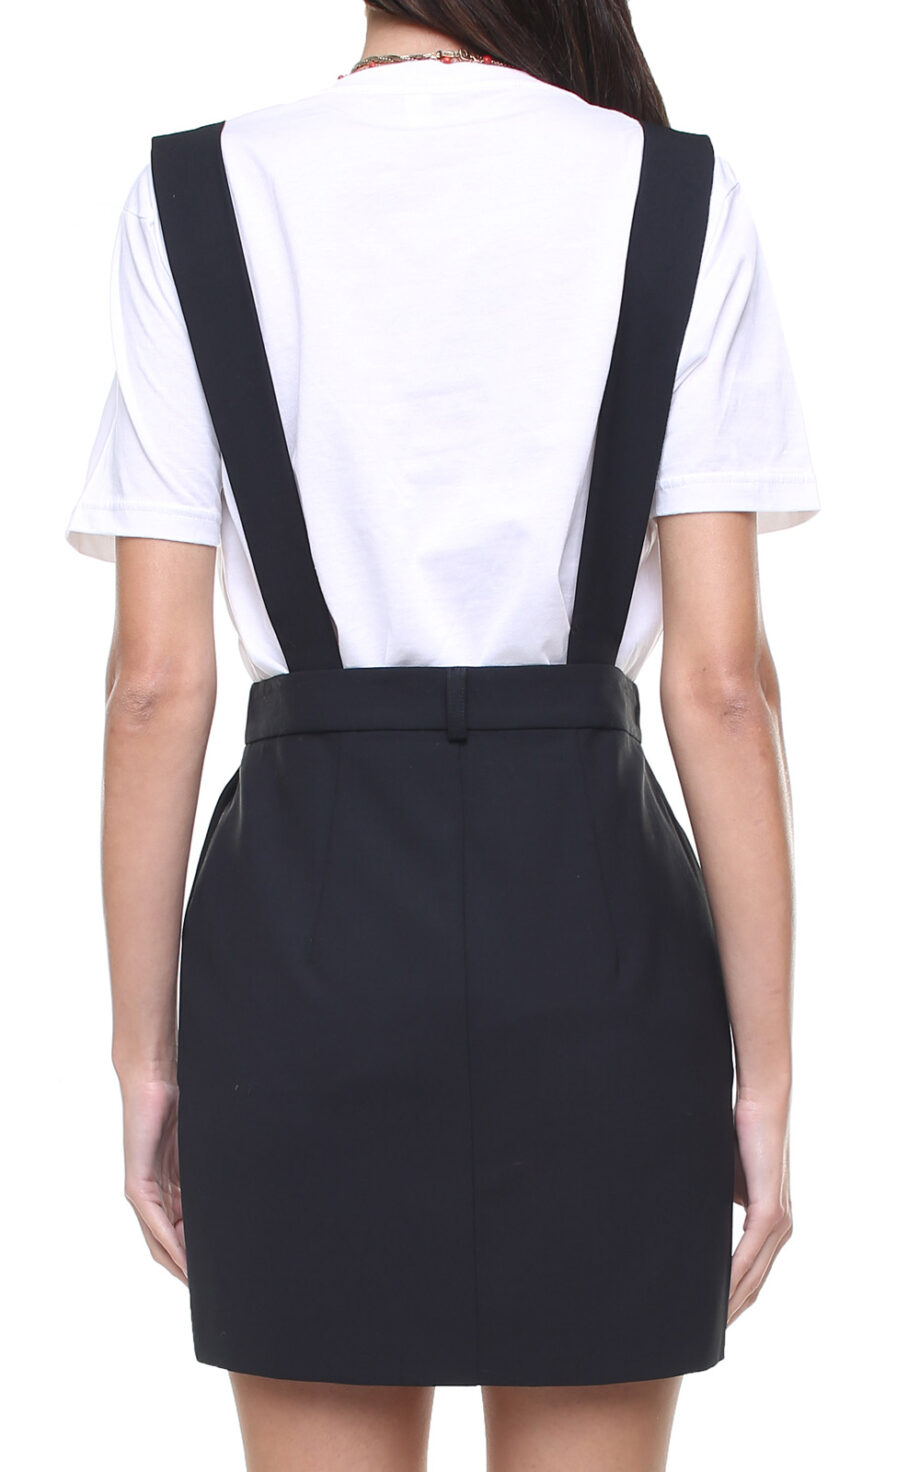 Mia Skirt black w/ removable suspenders